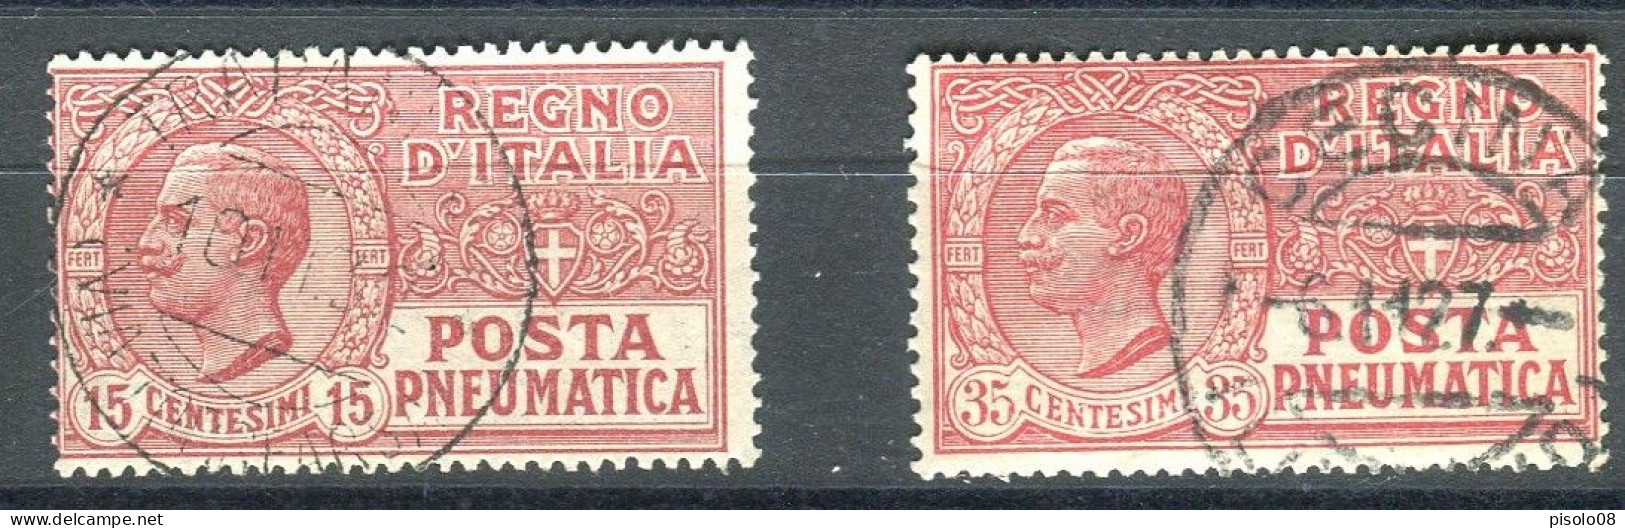 REGNO 1927-28 POSTA PNEUMATICA USATA - Pneumatische Post